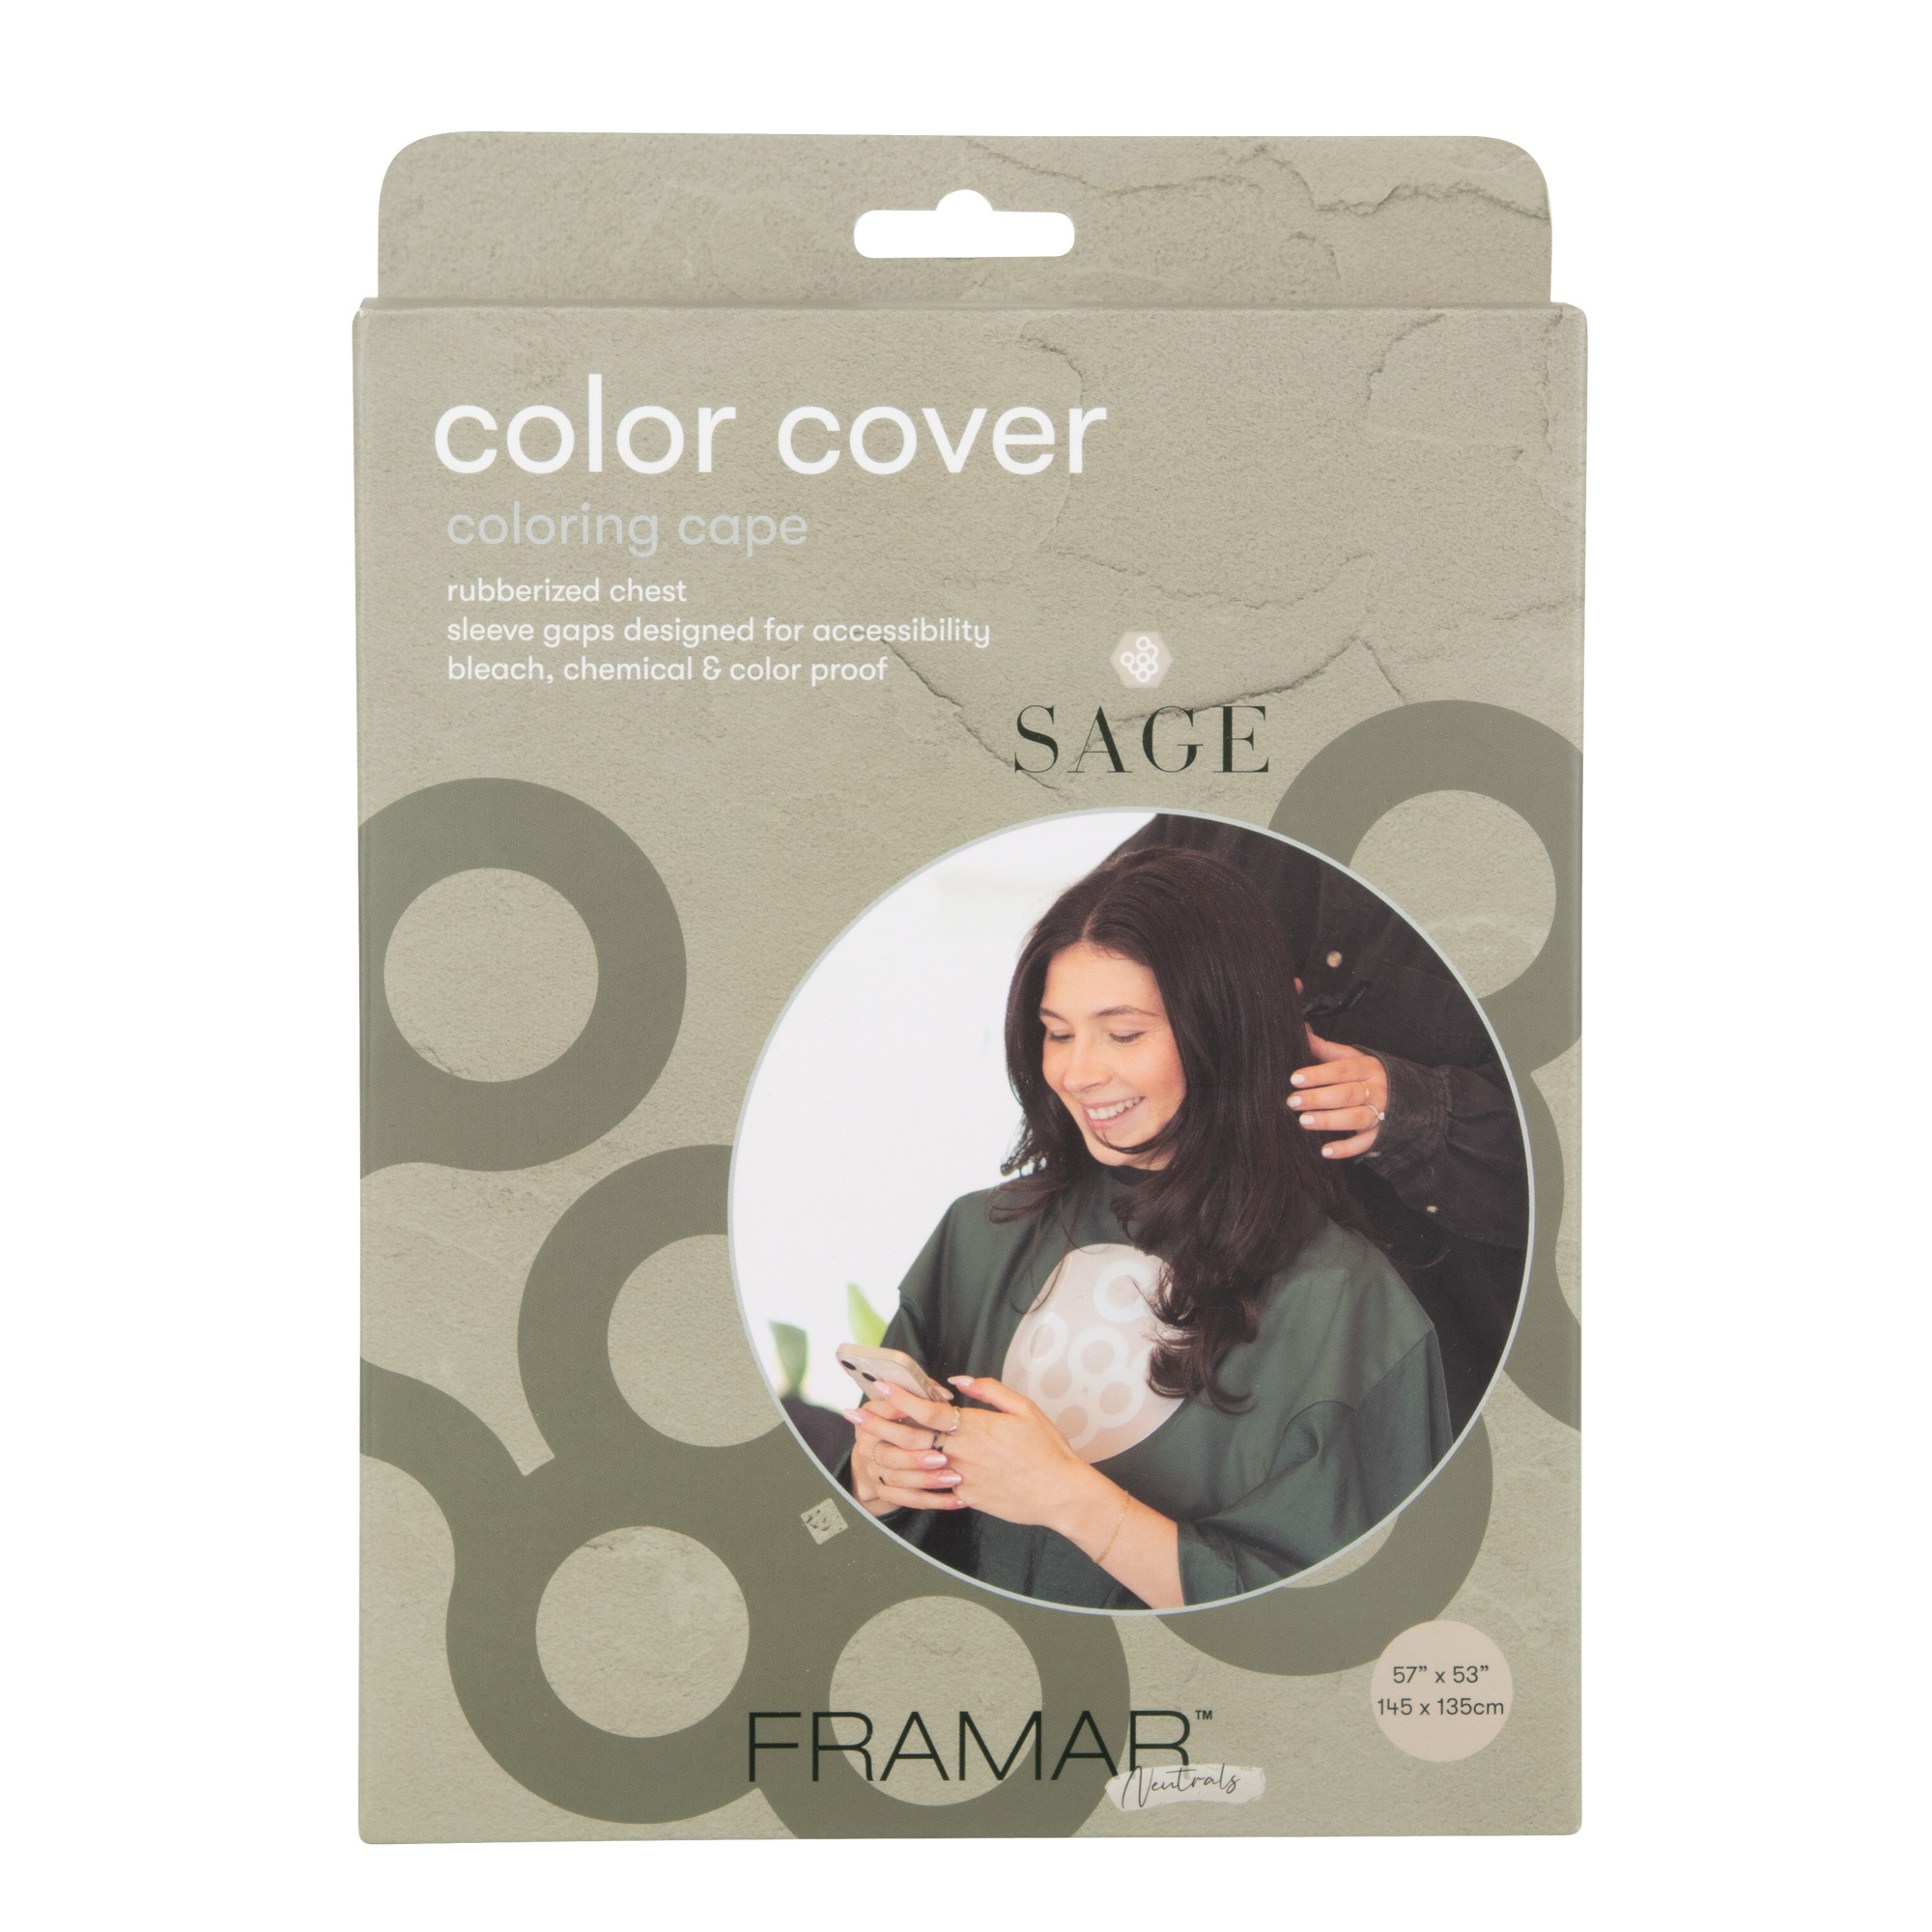 Framar CAPES: Color Cover Sage Colouring Cape 57" x 53"